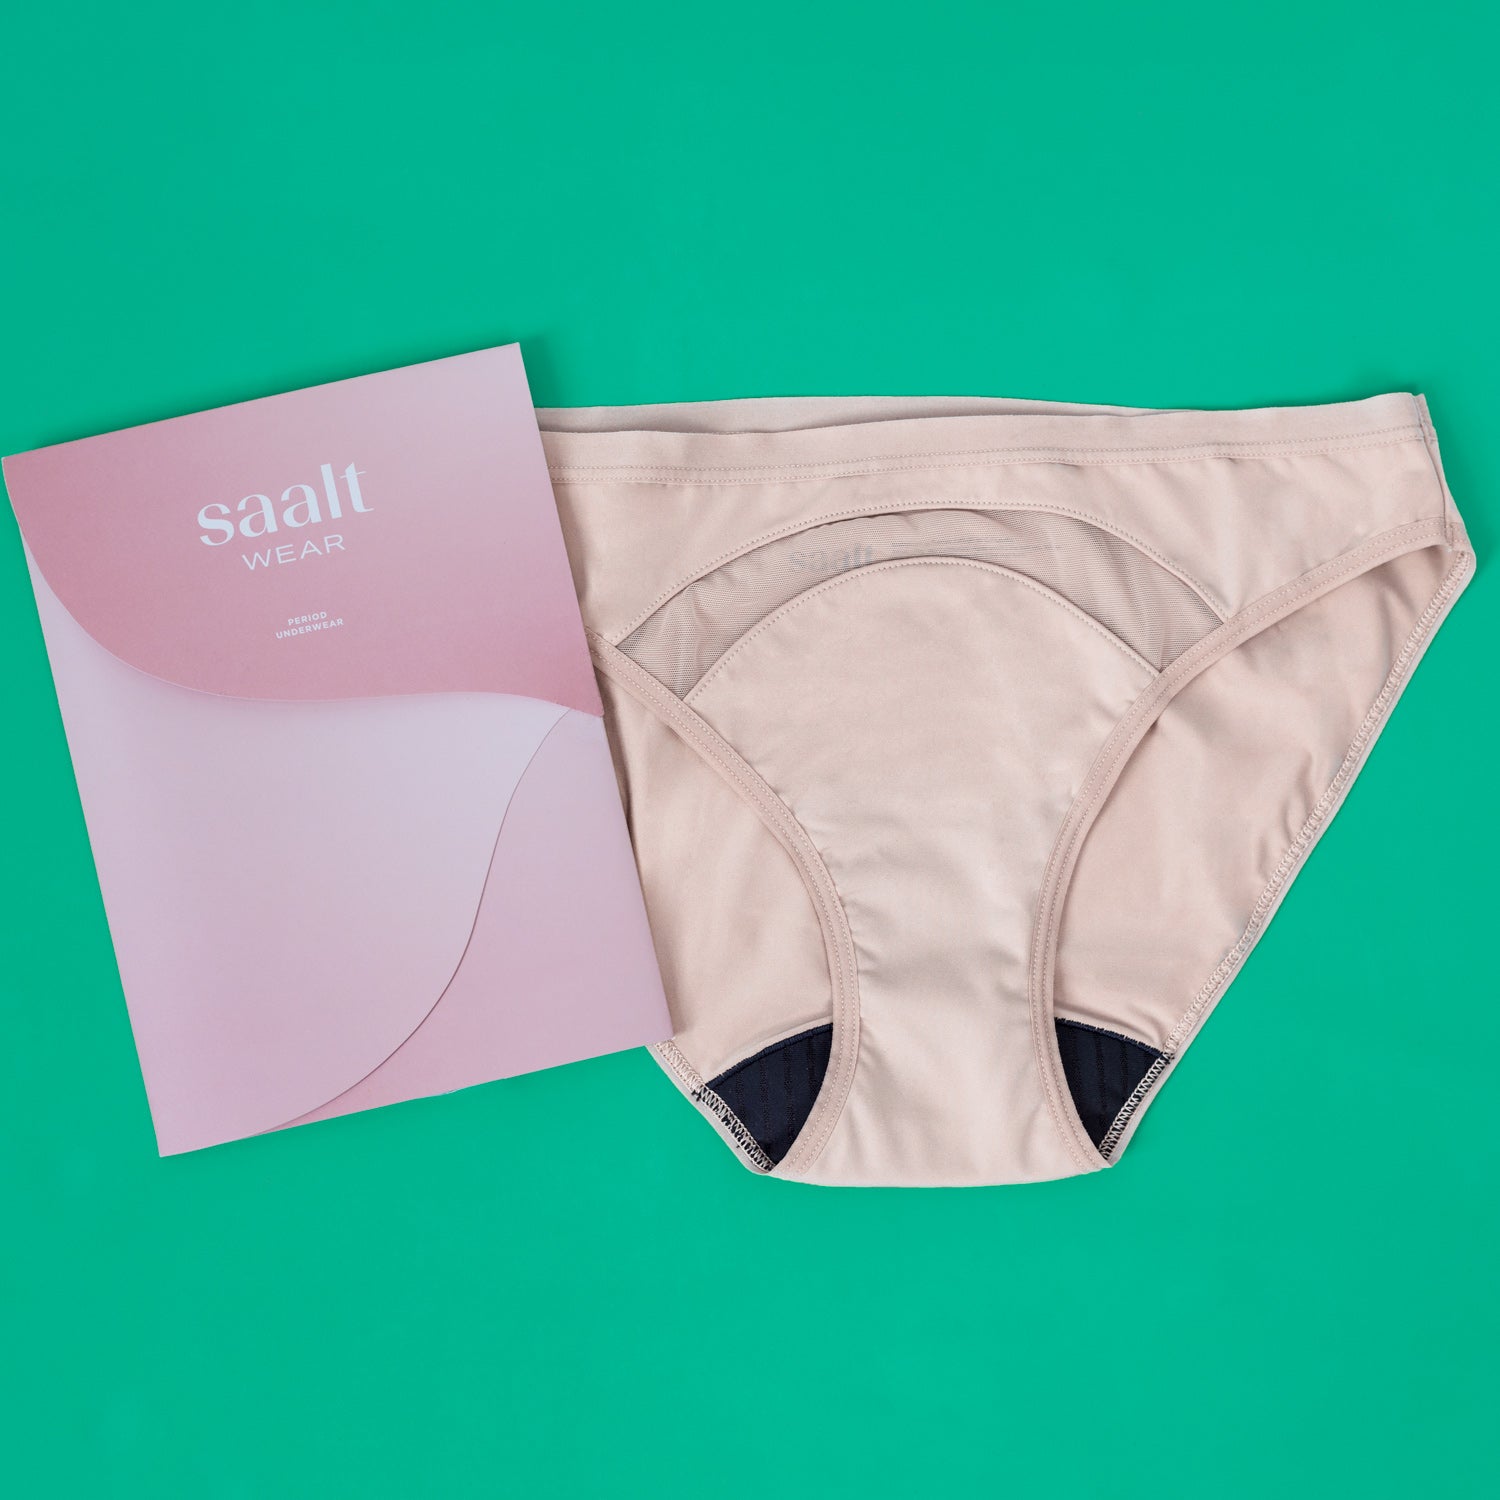 Saalt Wear Elemental Mesh Bikini with packaging